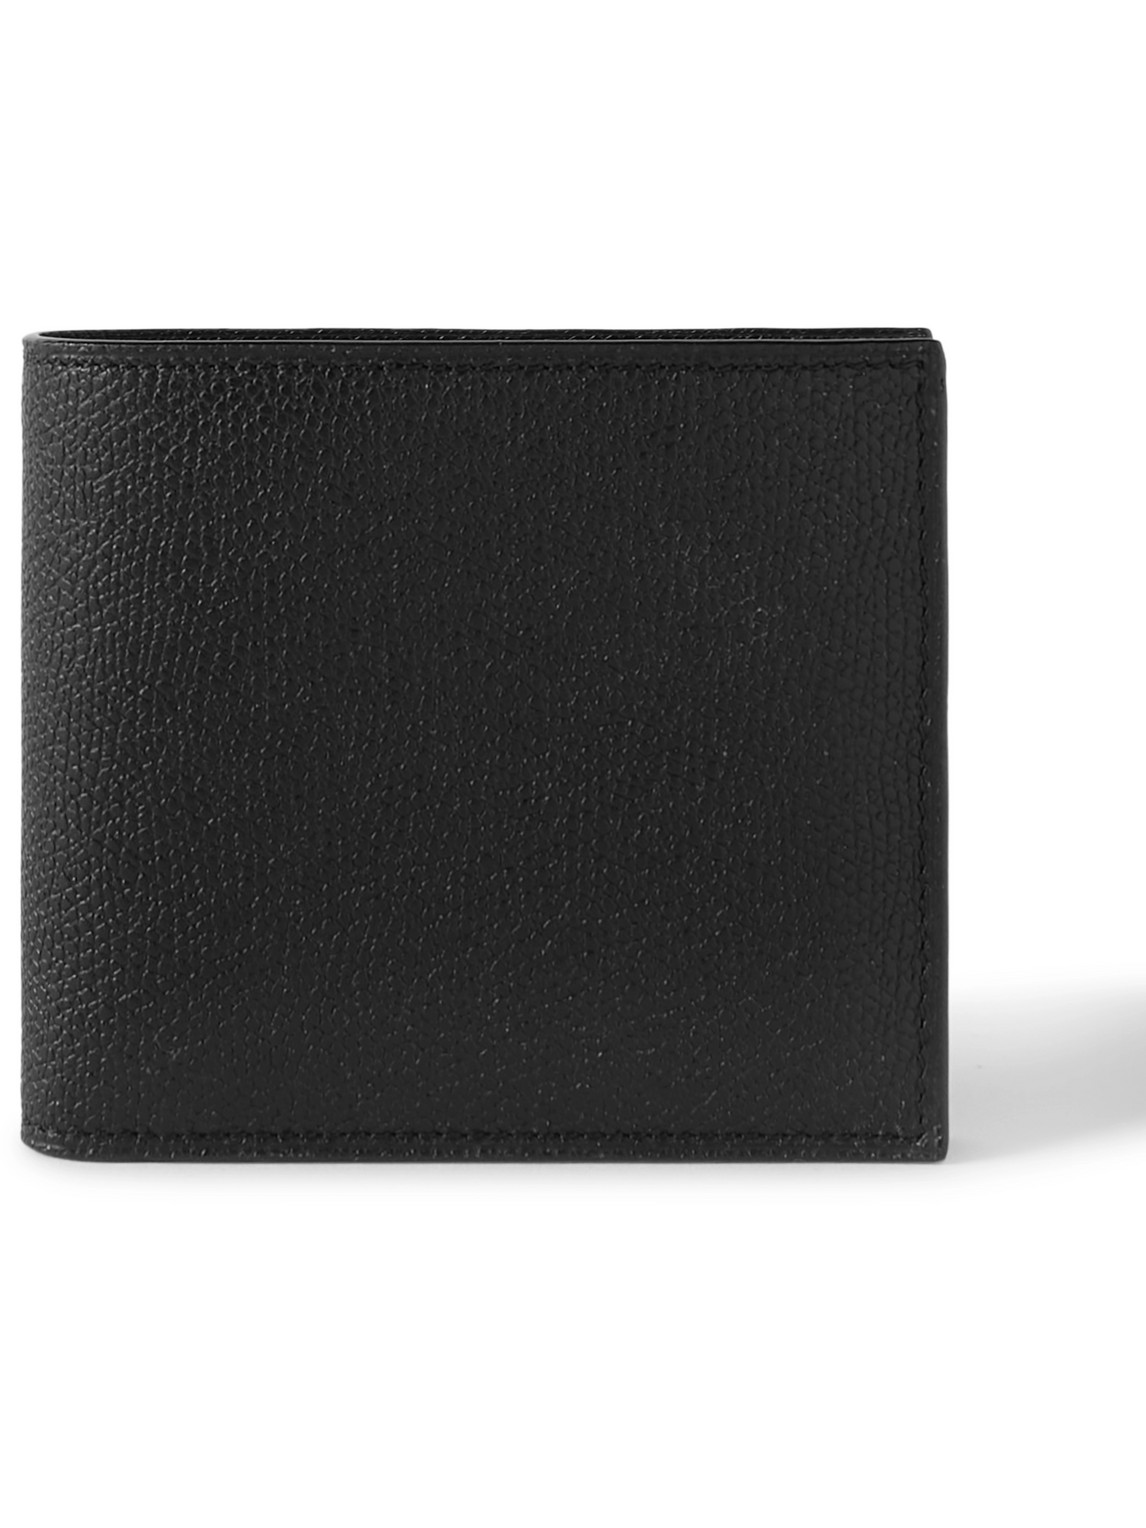 Valextra Pebble-grain Leather Billfold Wallet In Black